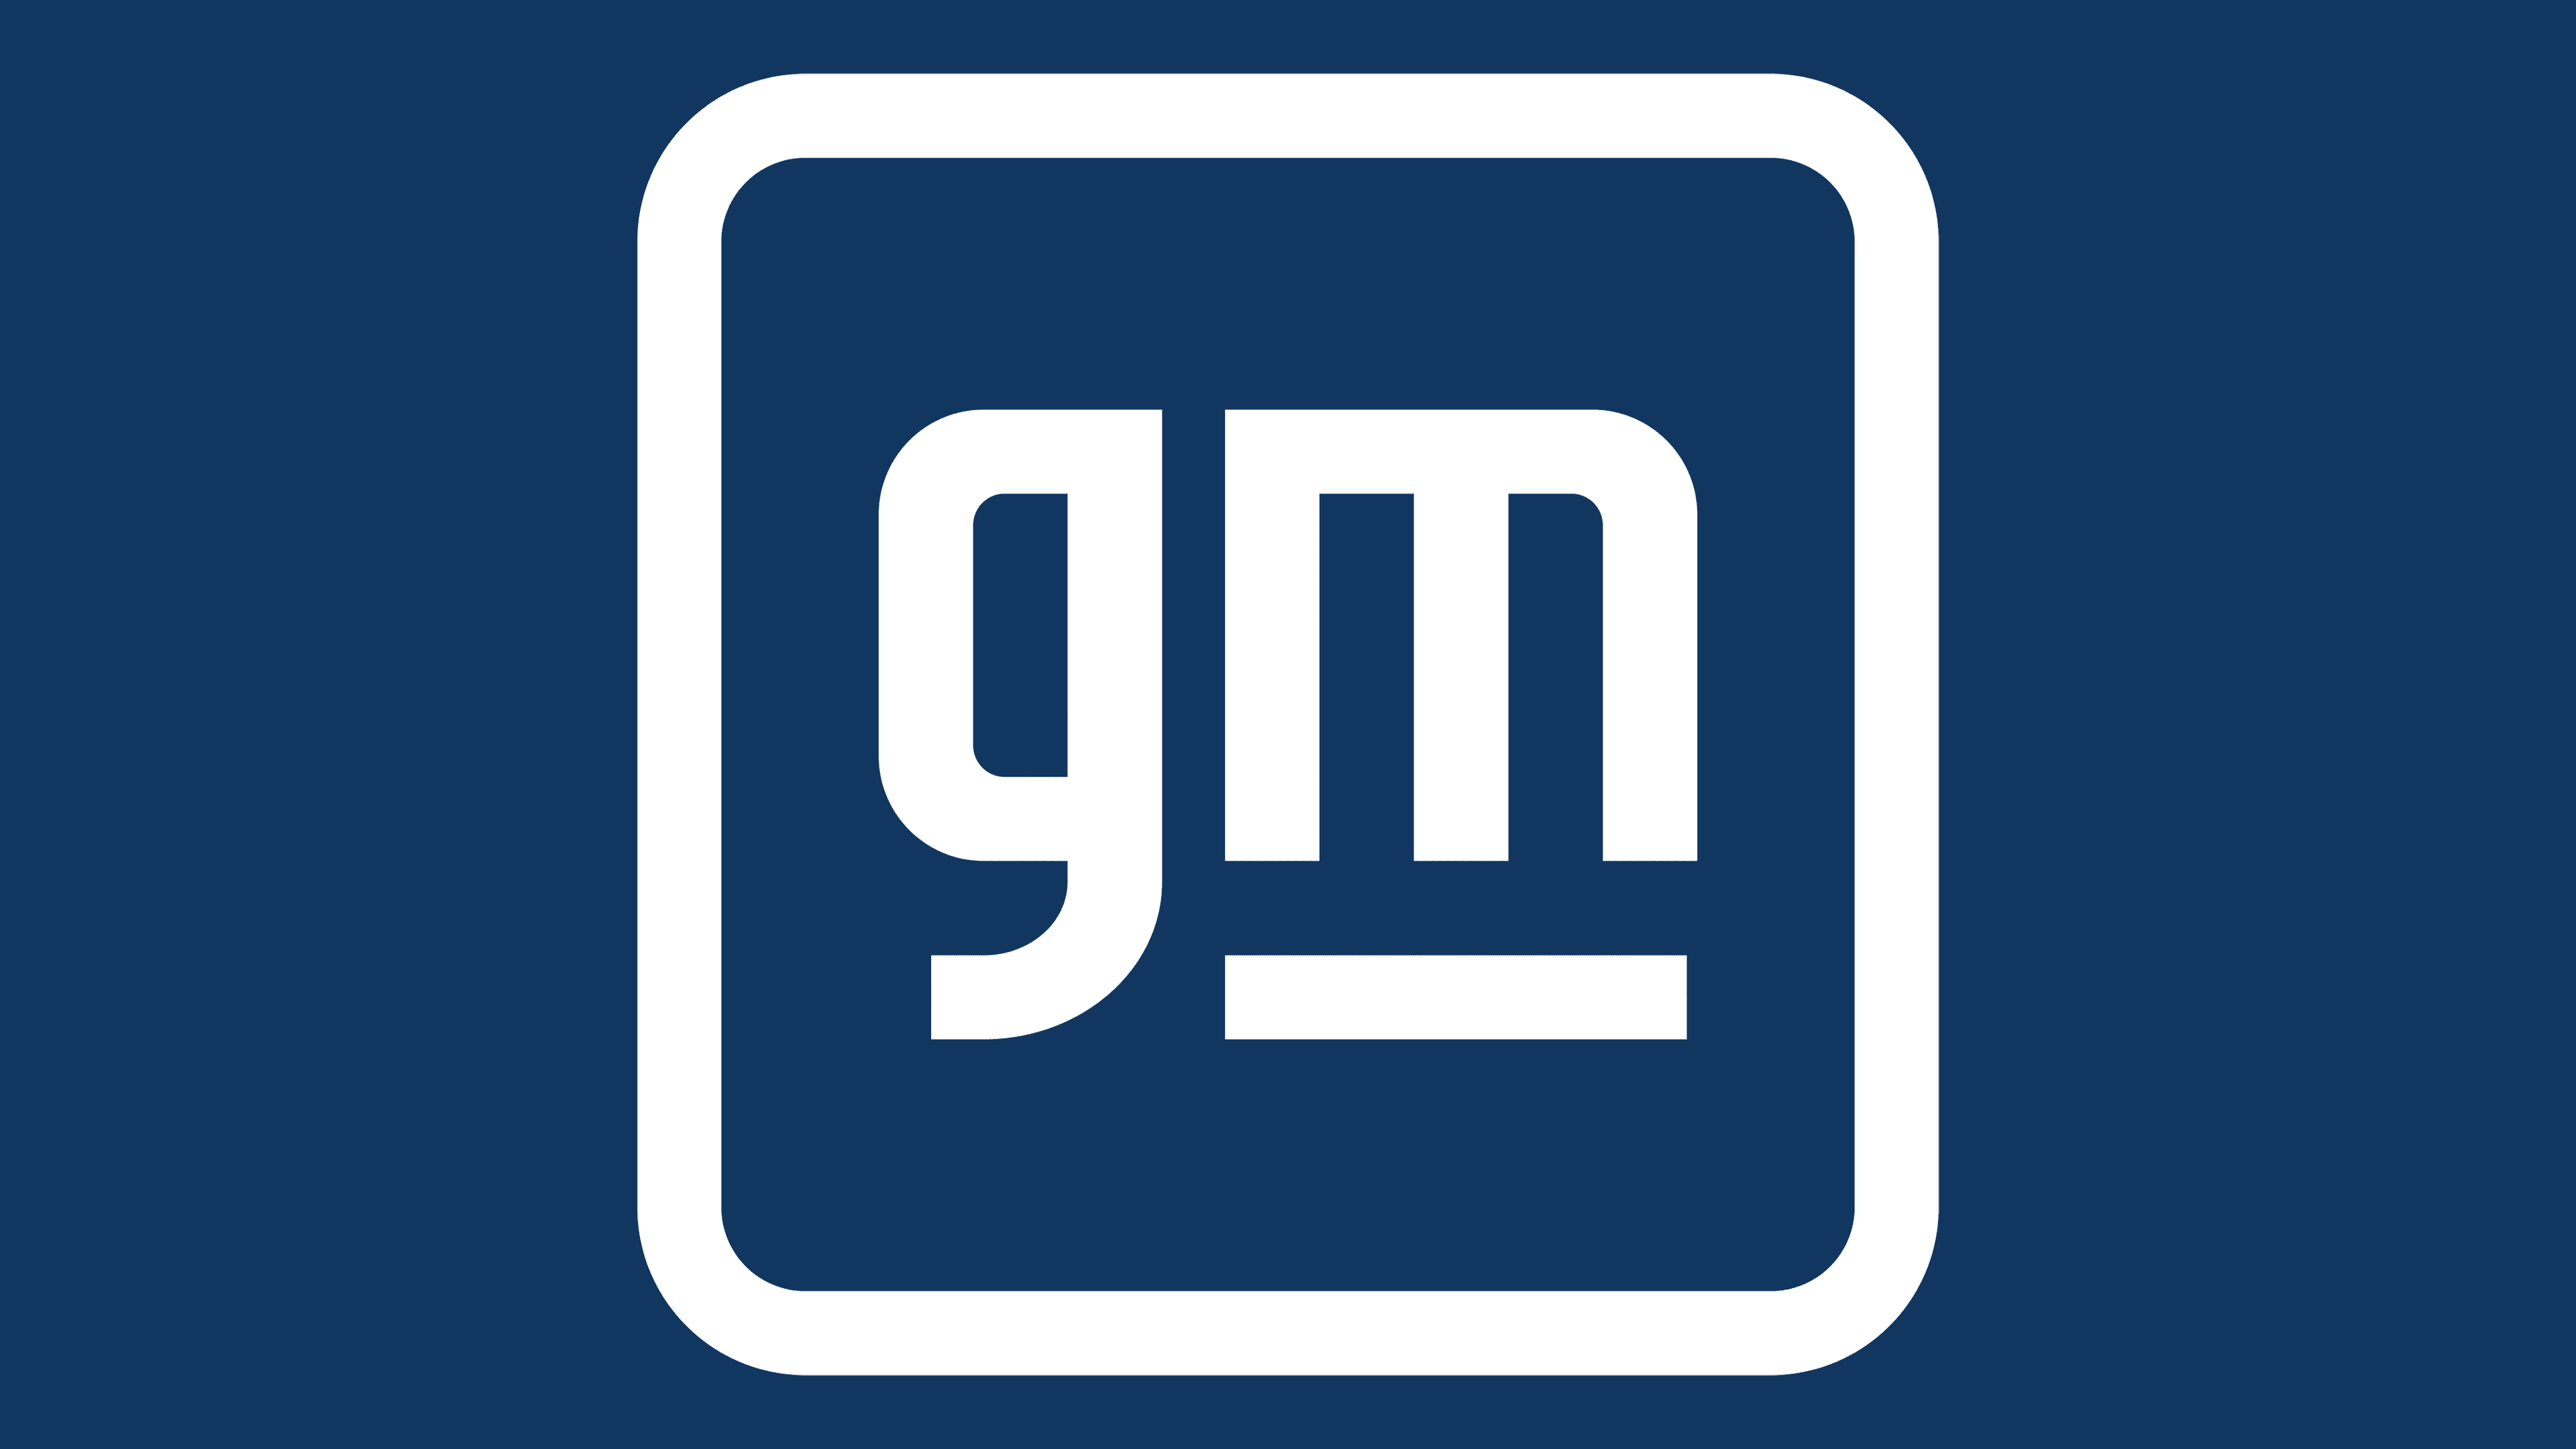 General Motors Logo History 